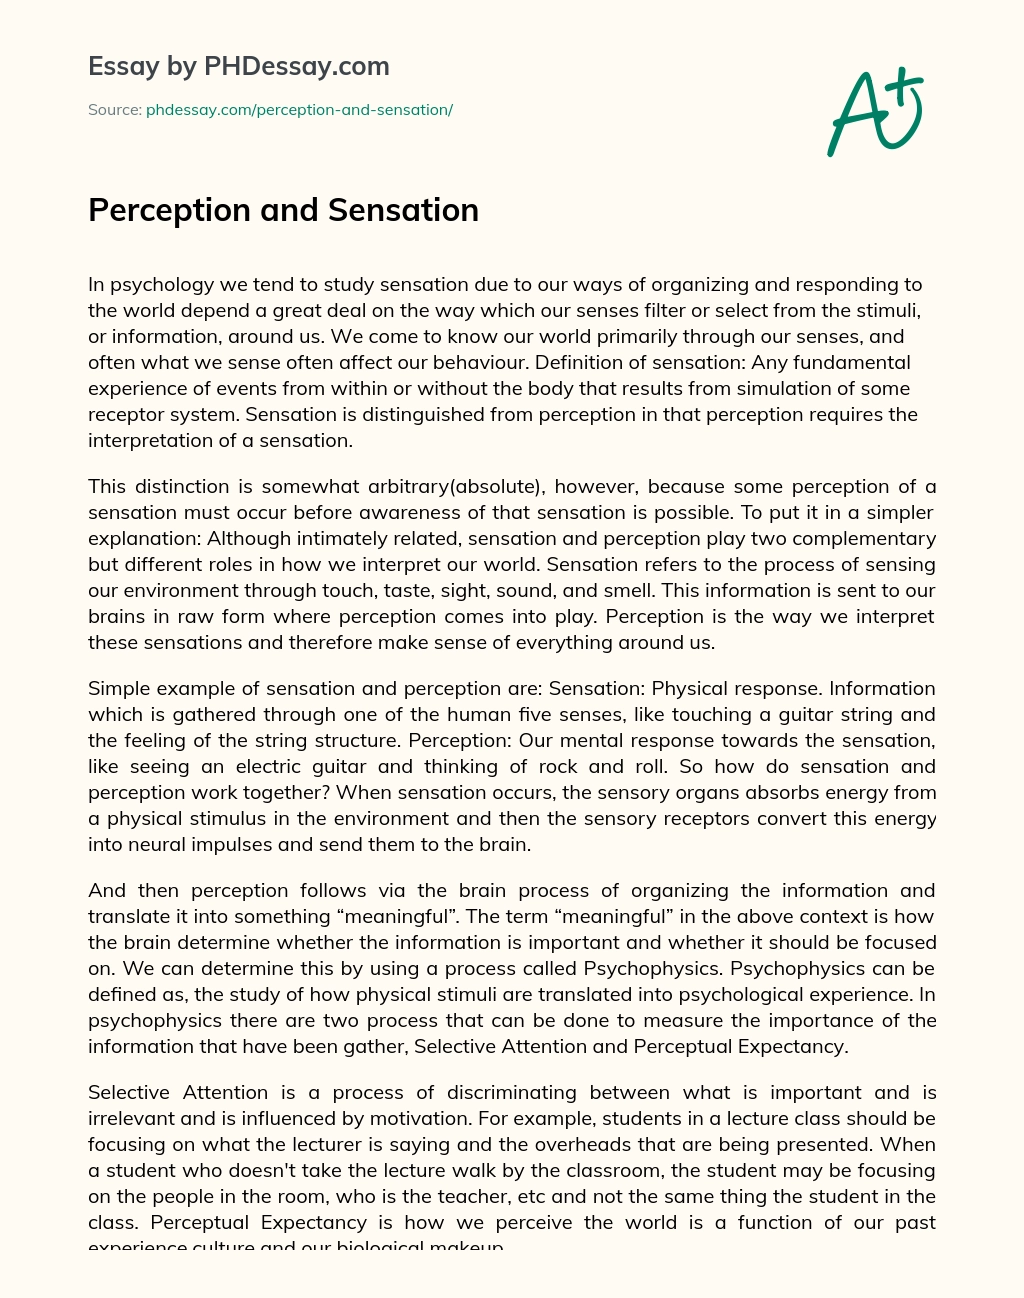 Perception and Sensation essay